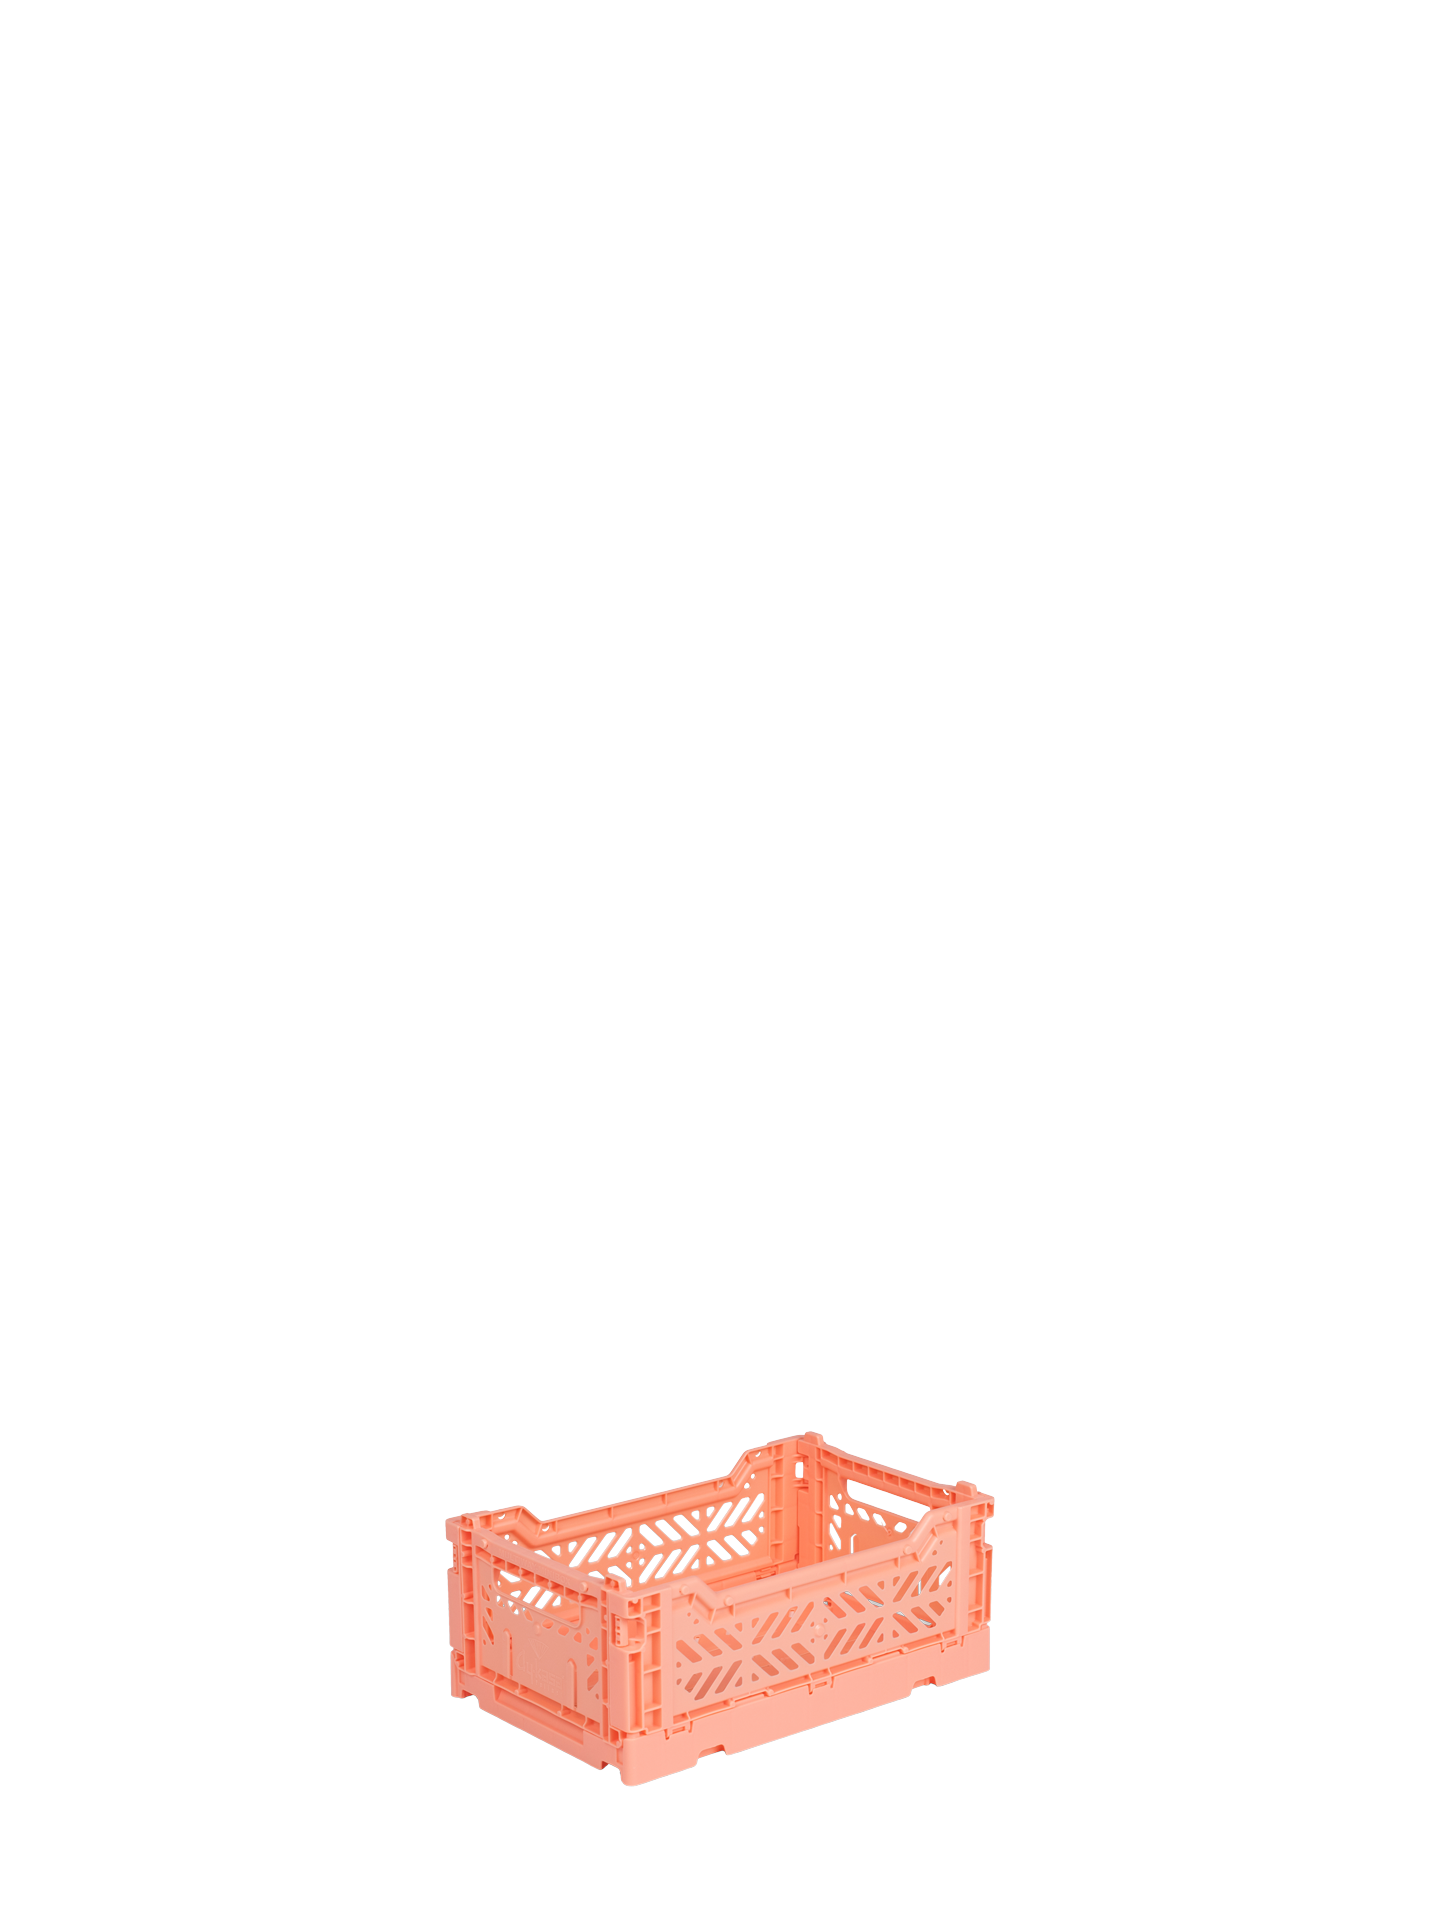 Mini Aykasa crate in salmon peach pink stacks and folds